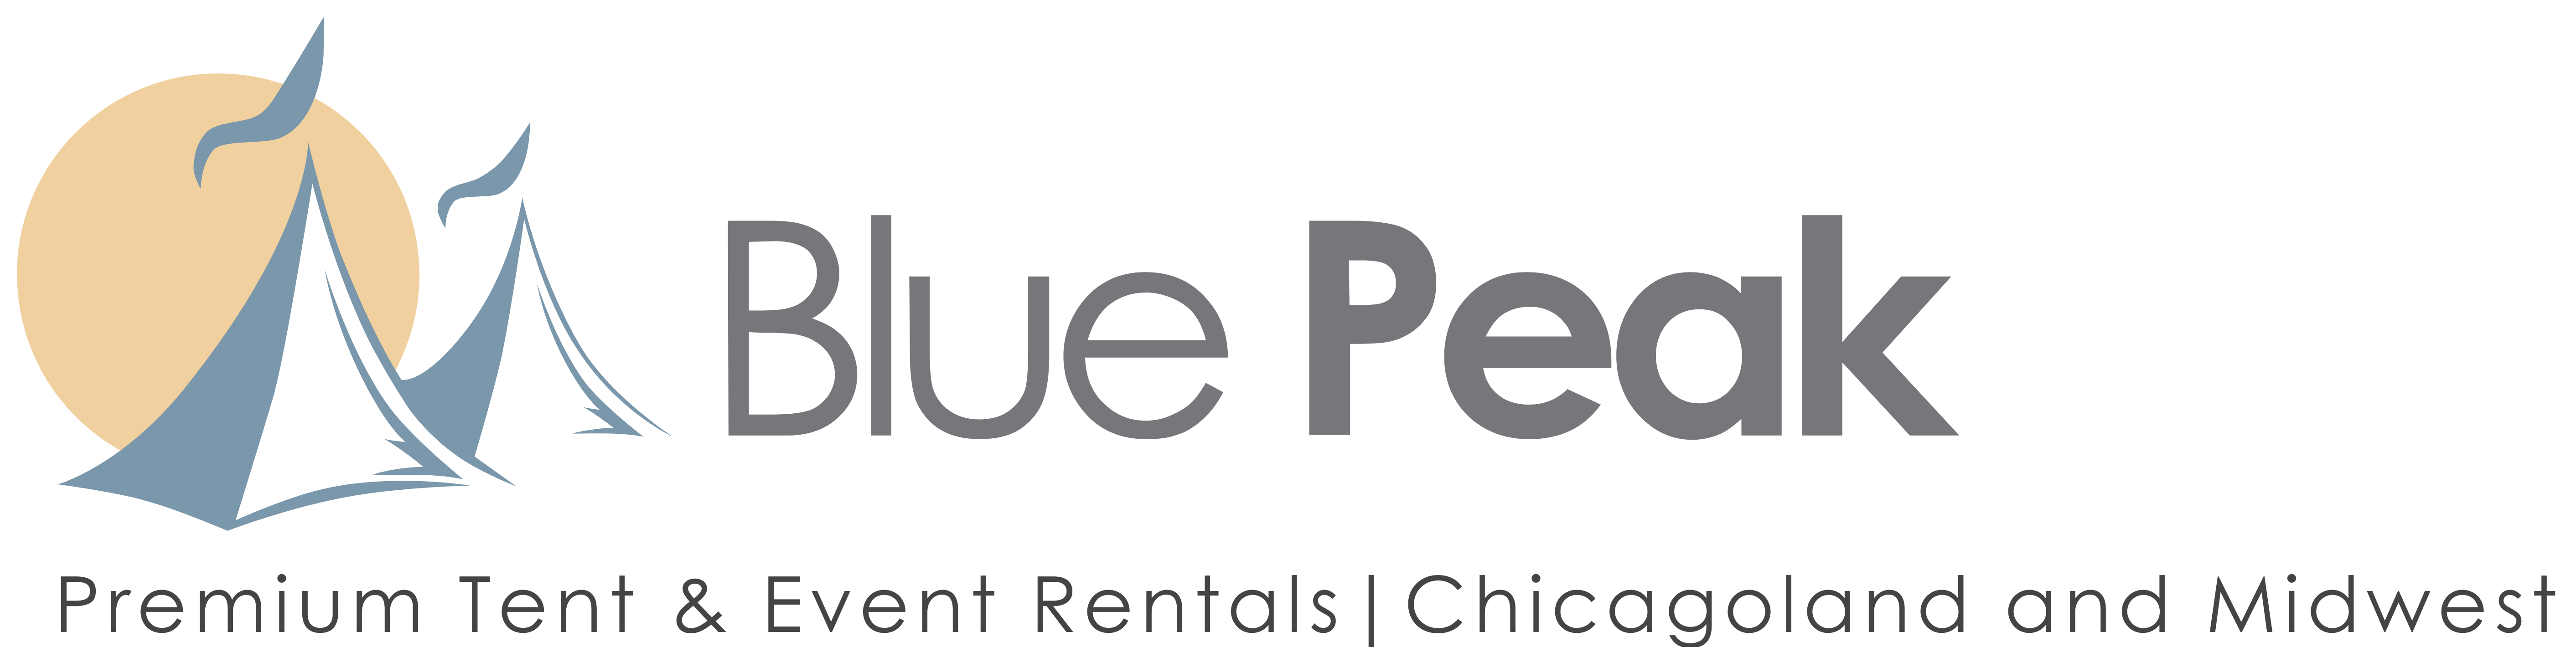 Blue Peak Tents, Inc. Logo